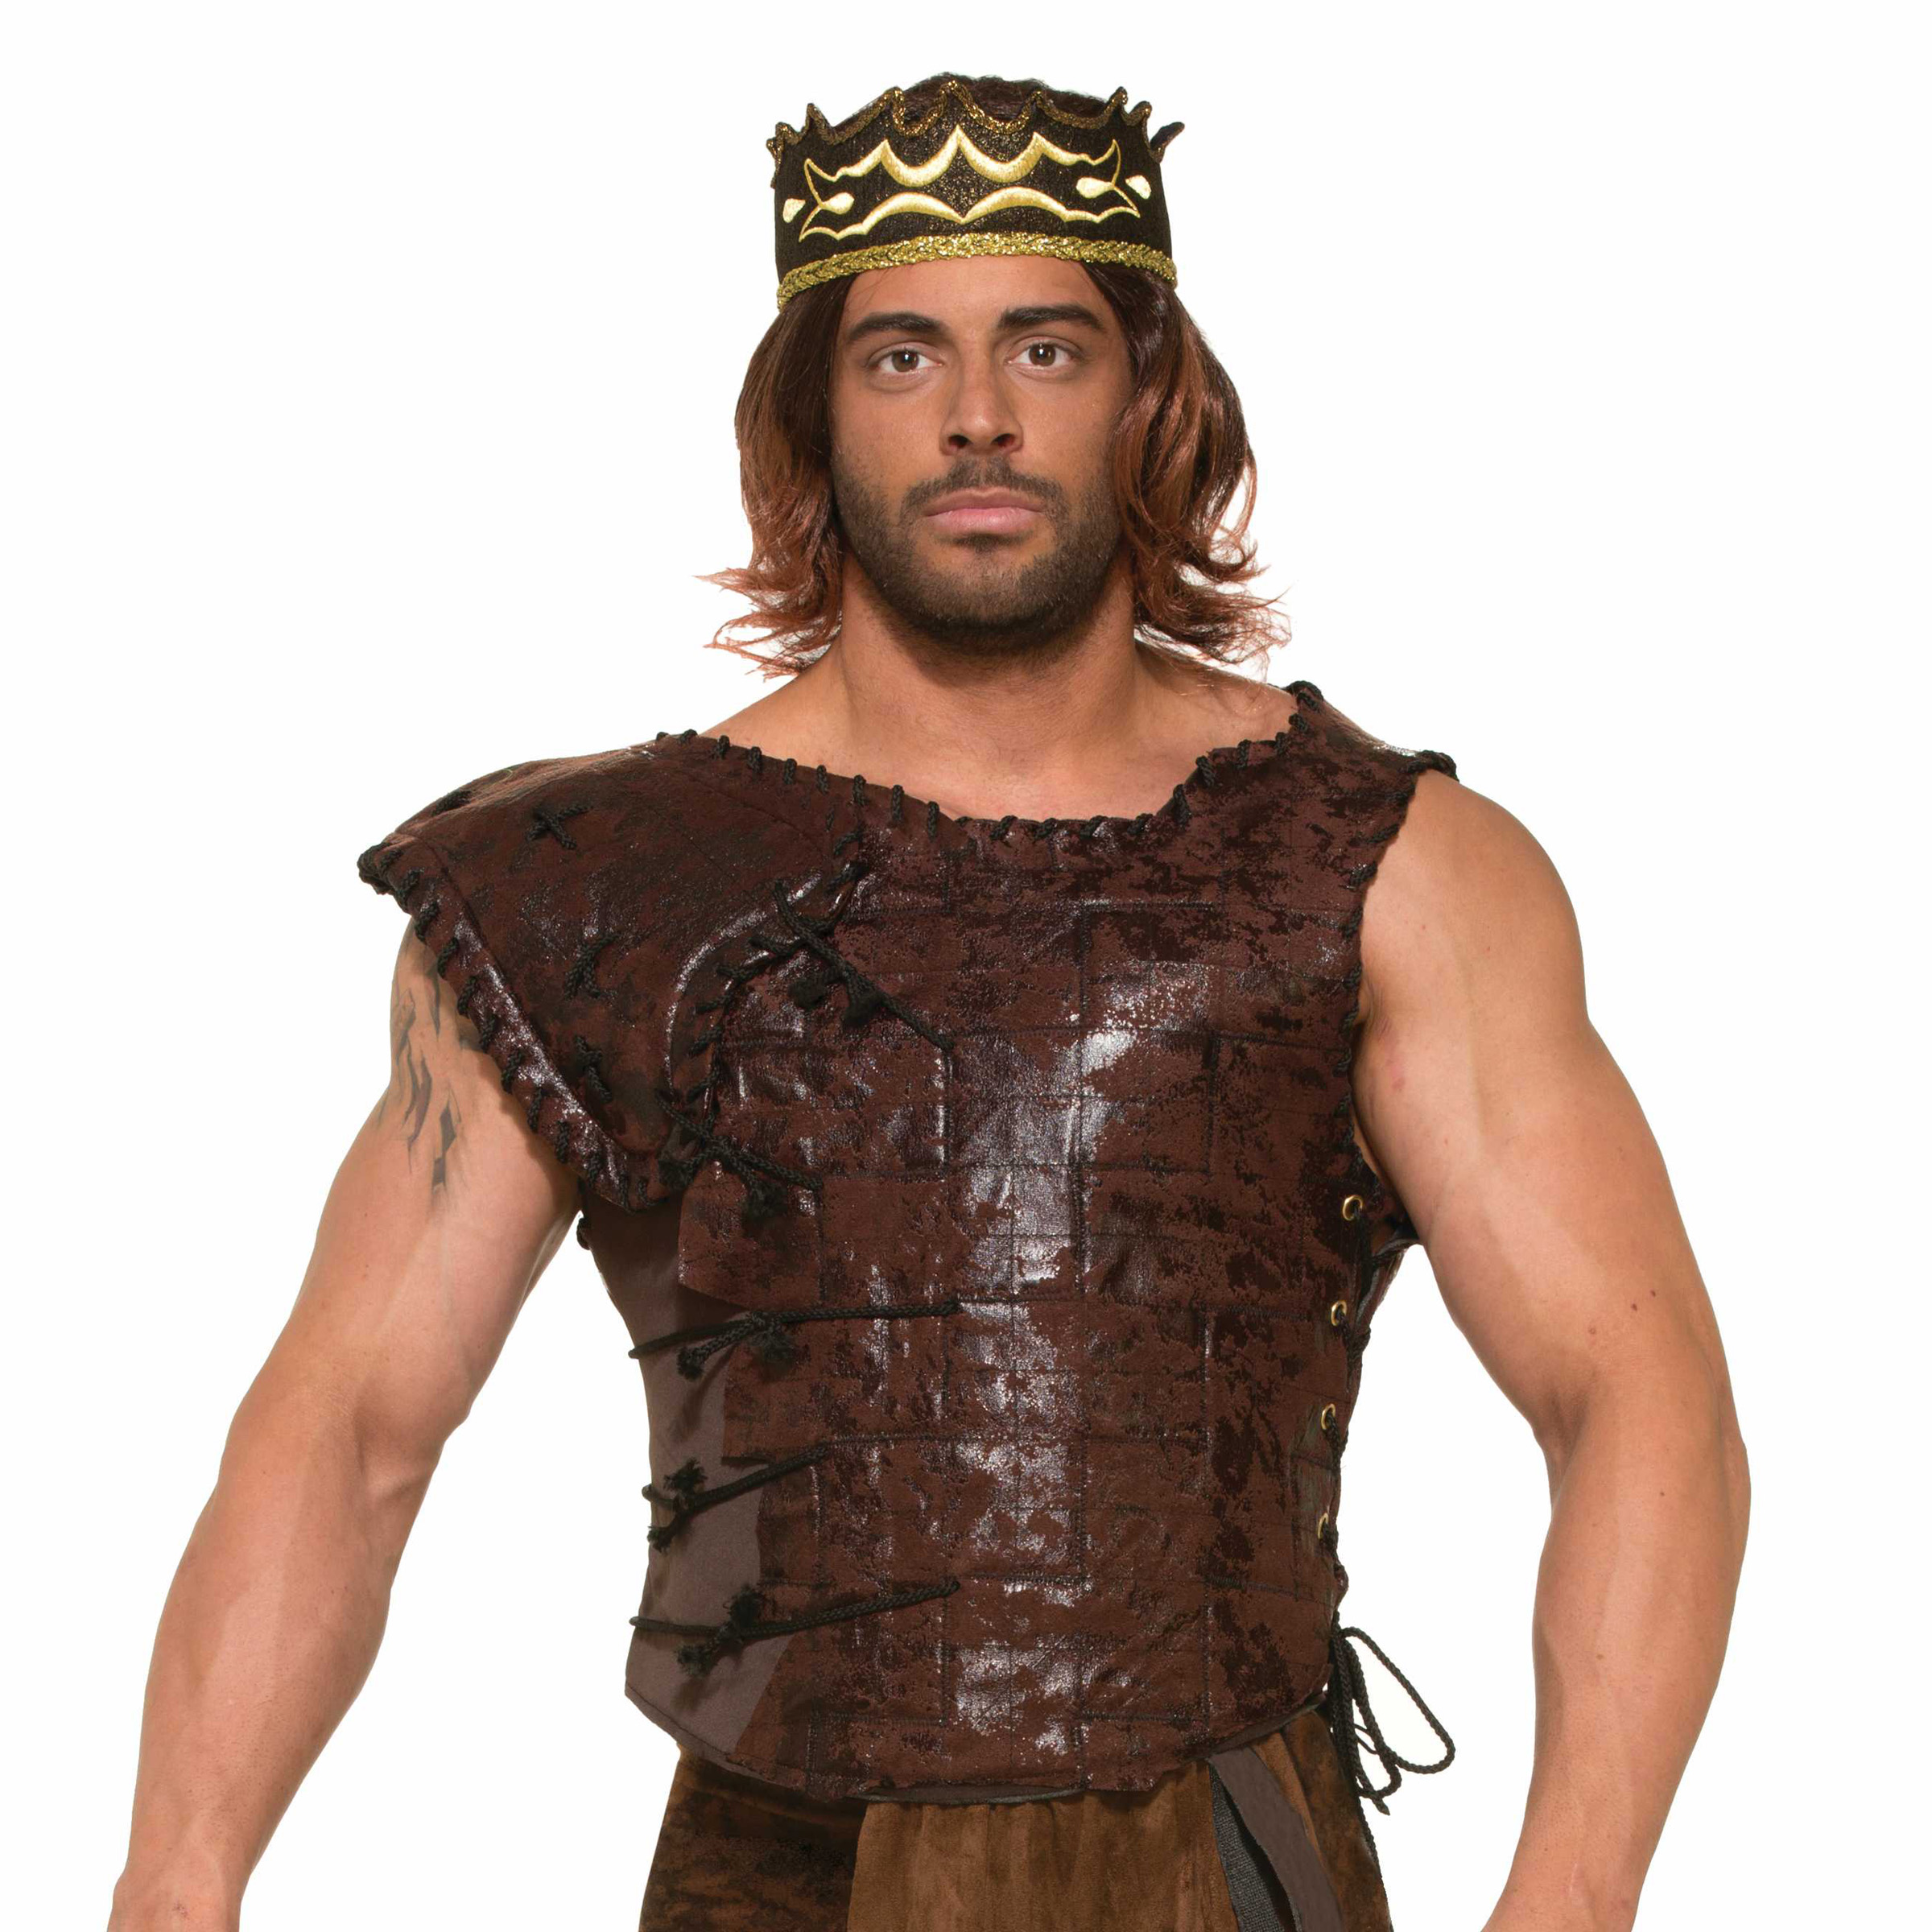 Medieval King